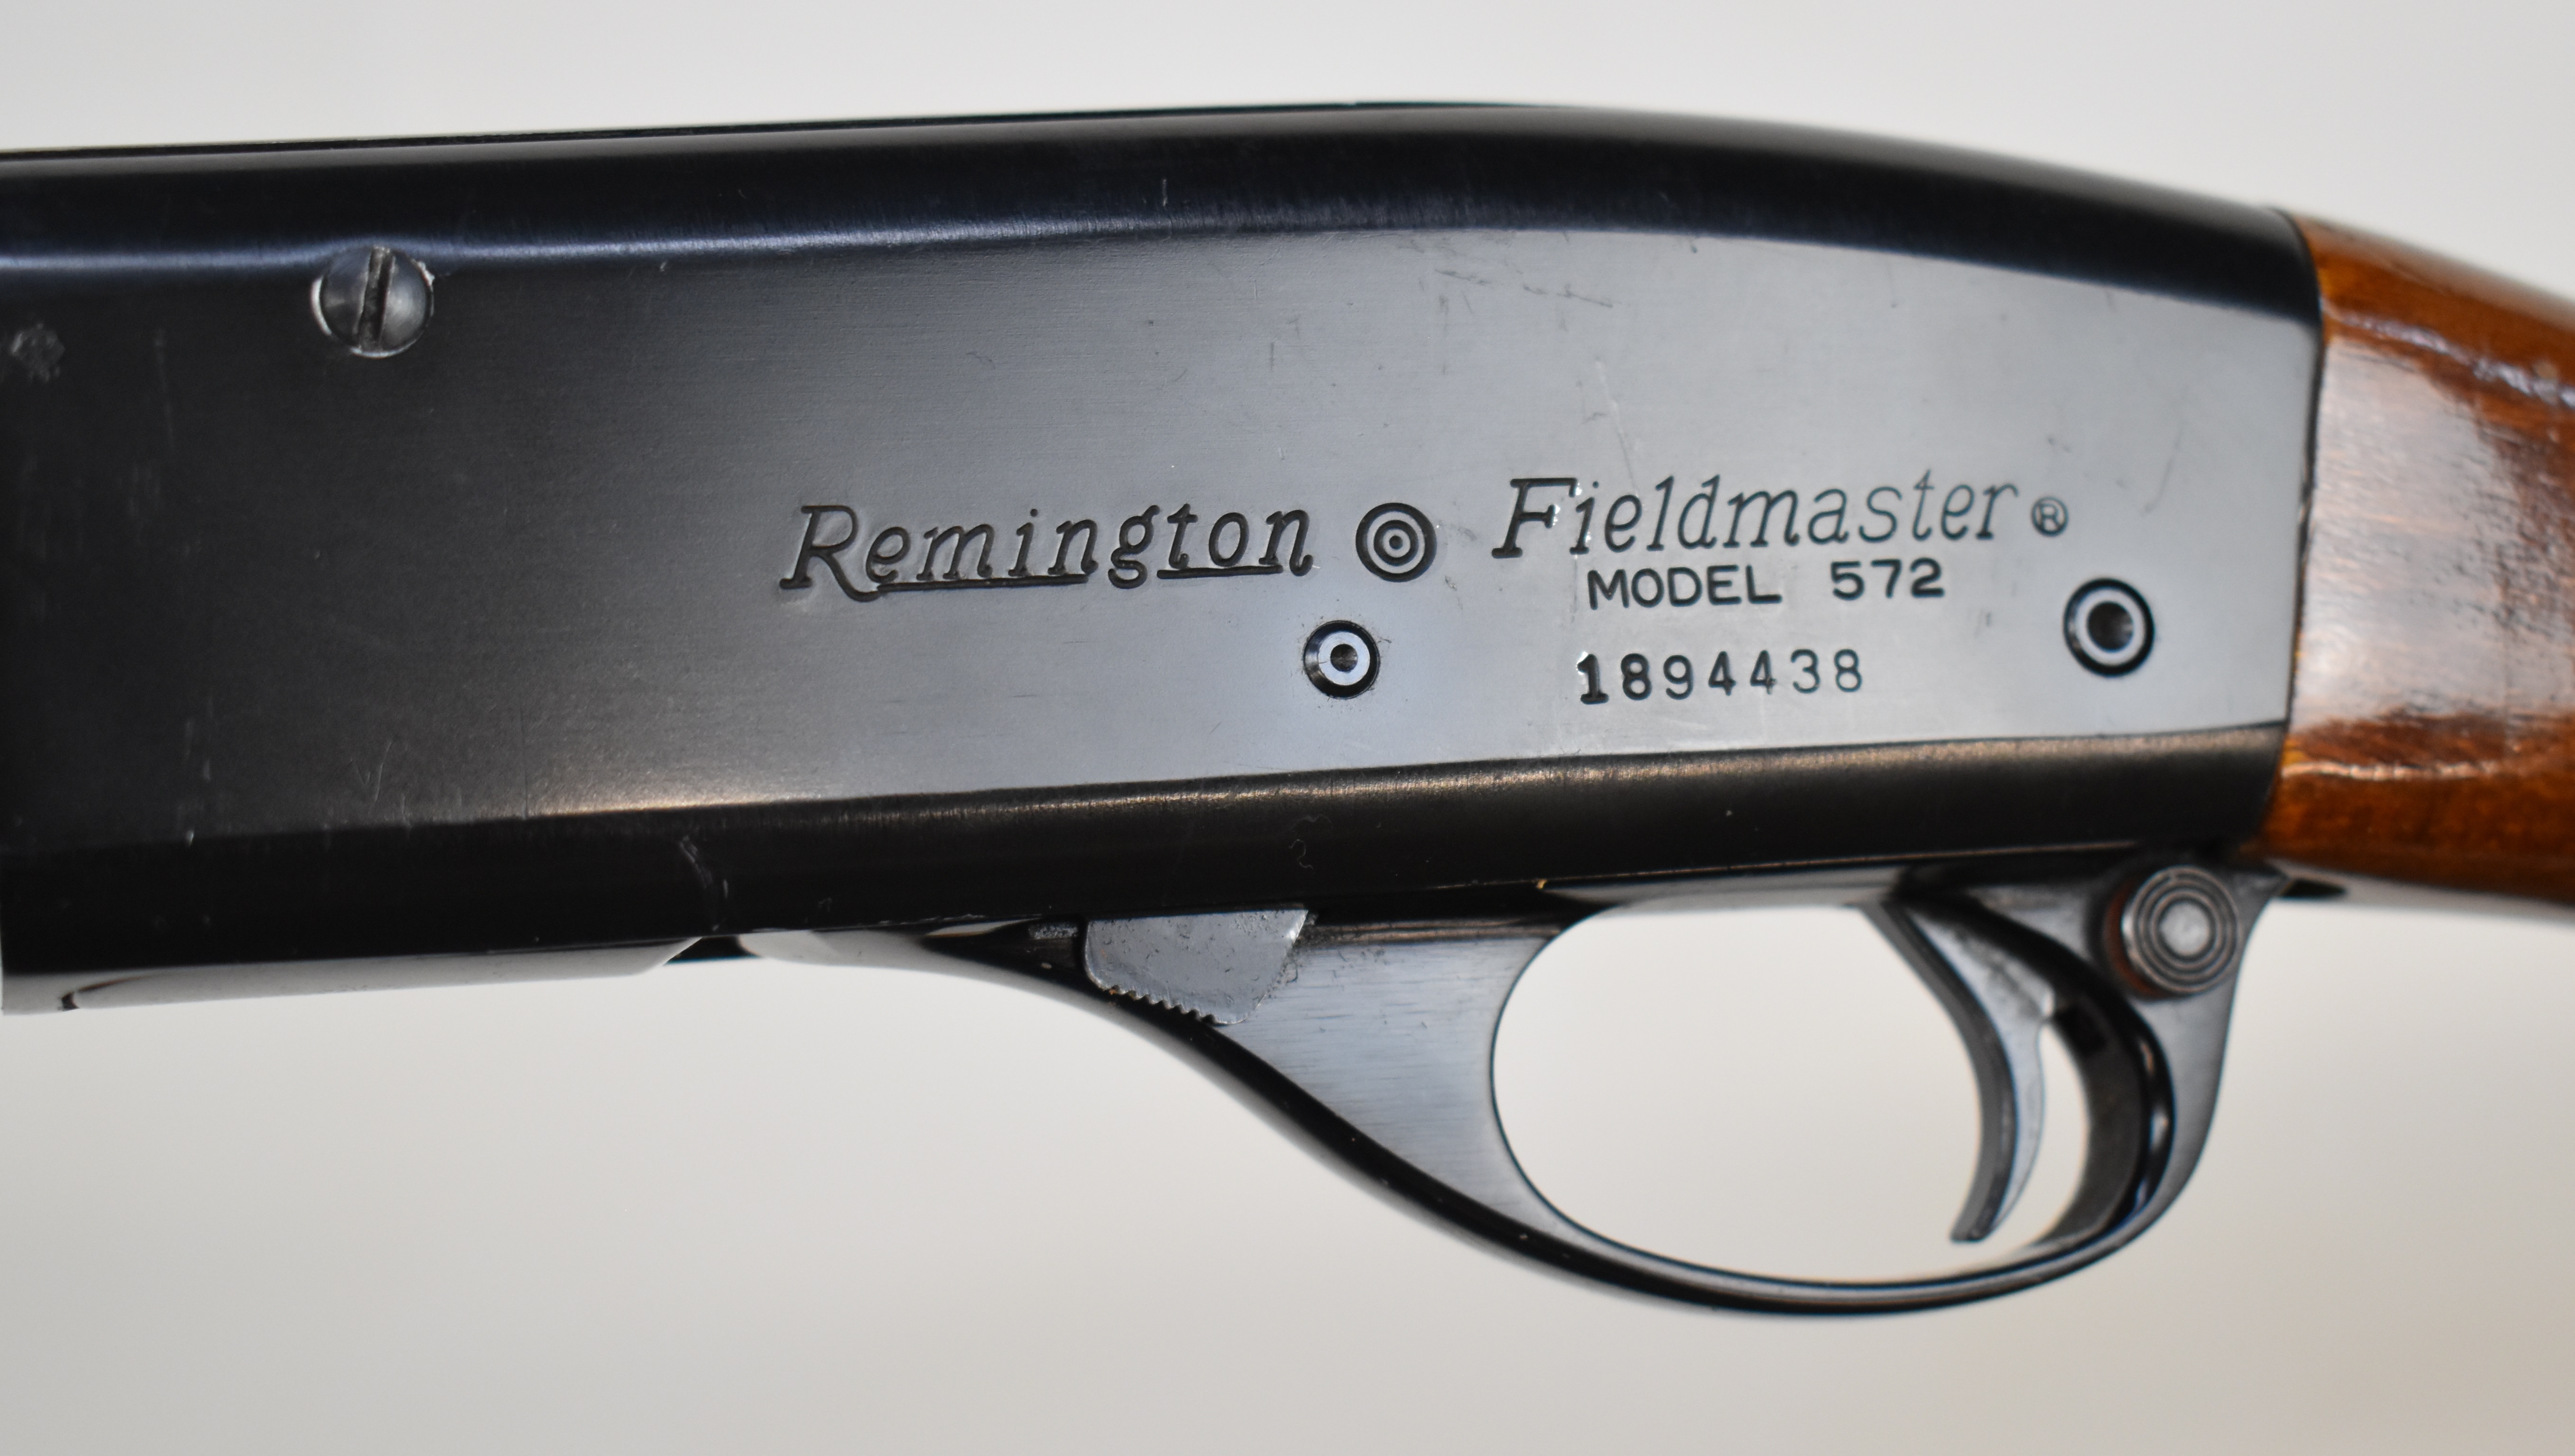 Remington Fieldmaster Model 572 .22 pump-action rifle with adjustable sights, semi-pistol grip, - Image 10 of 10